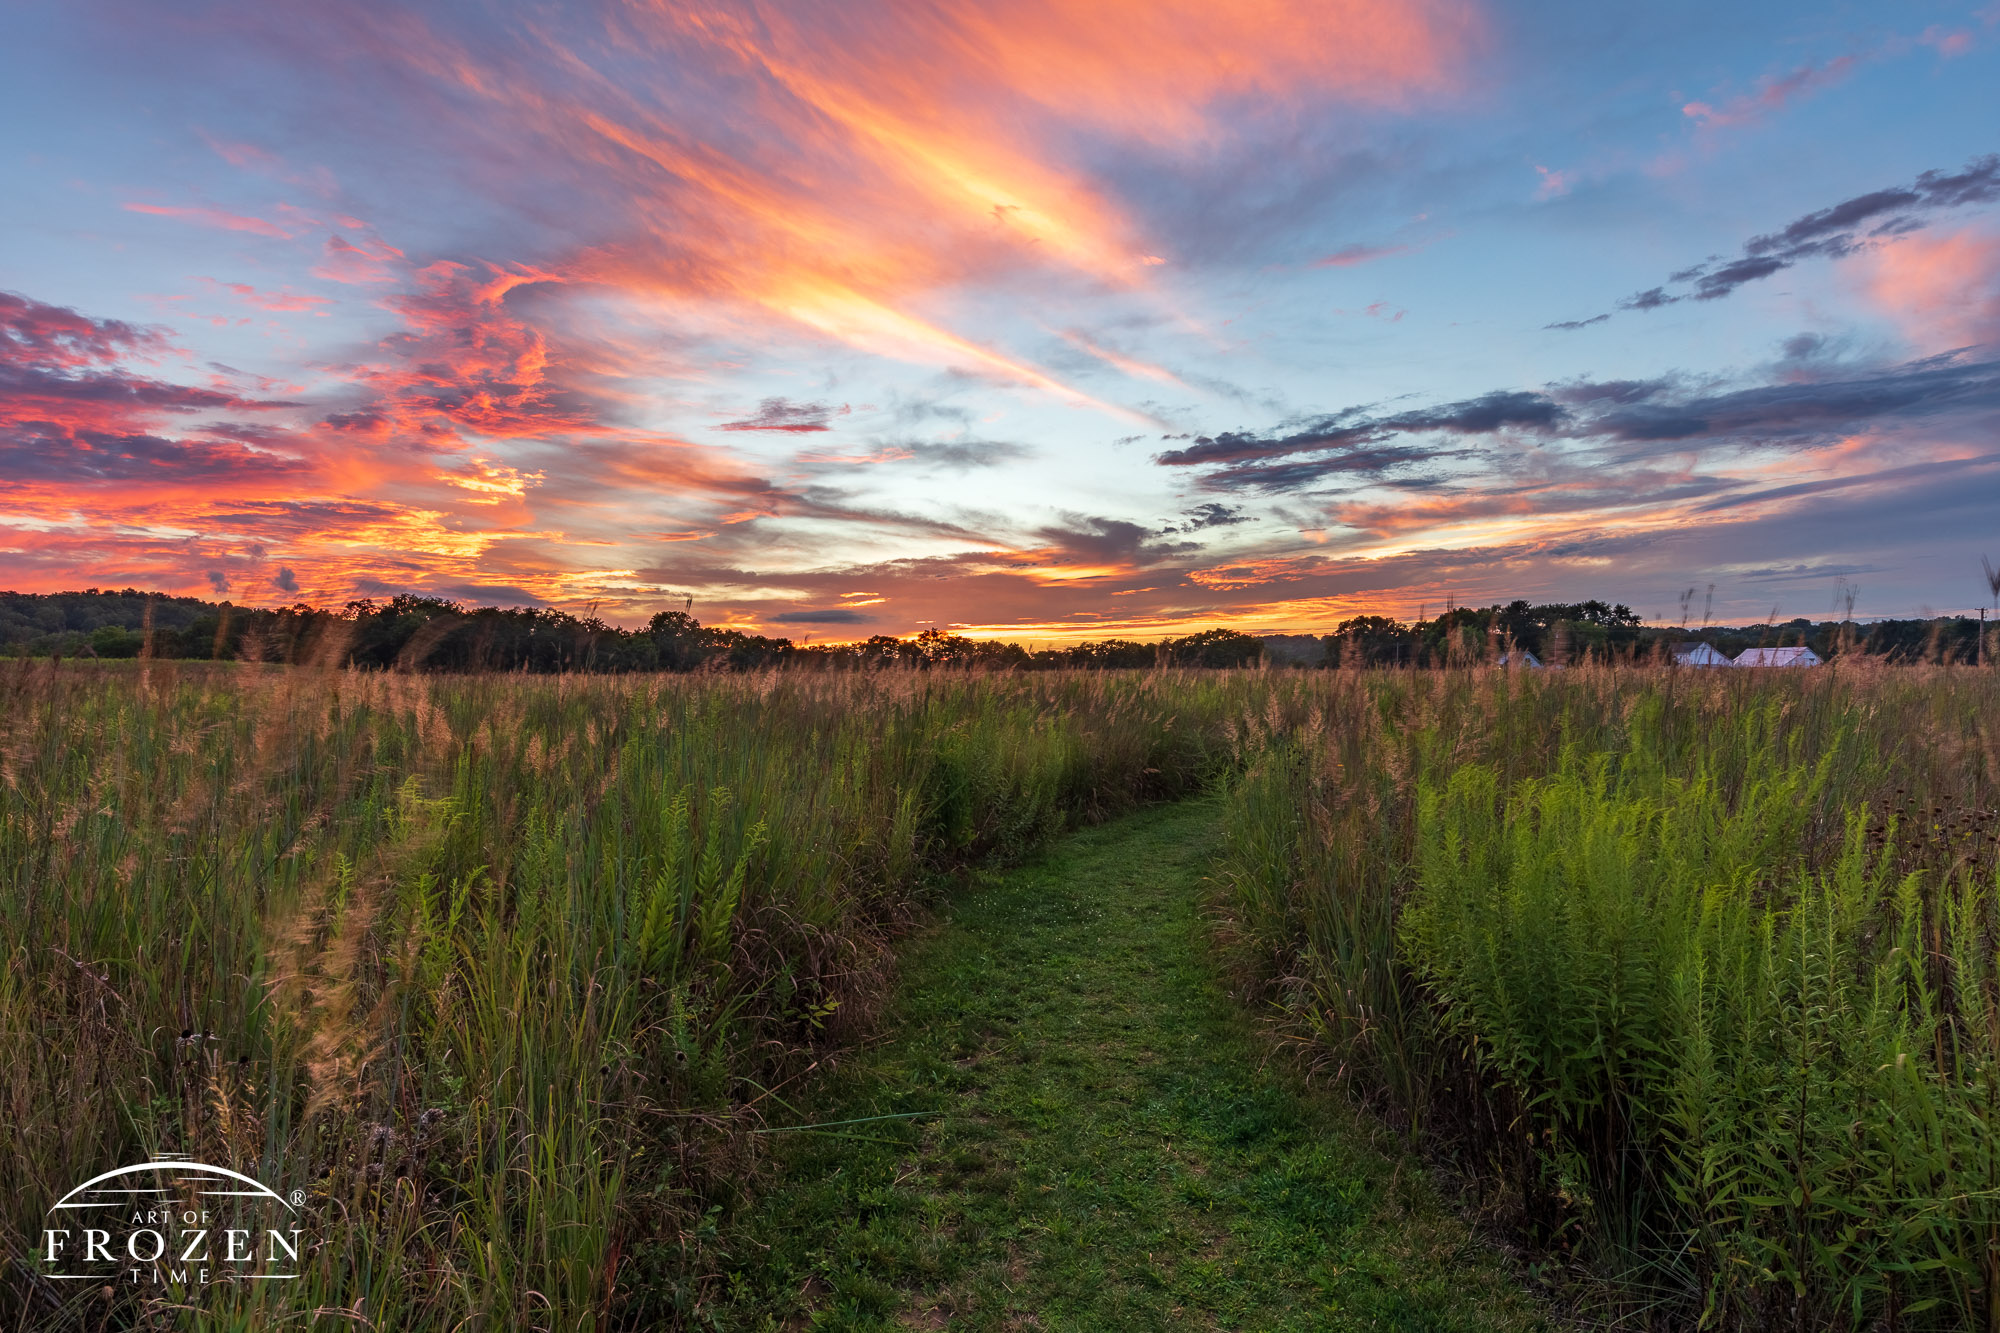 A trail through a tall grass prairie lies under the skies of a colorful sunset